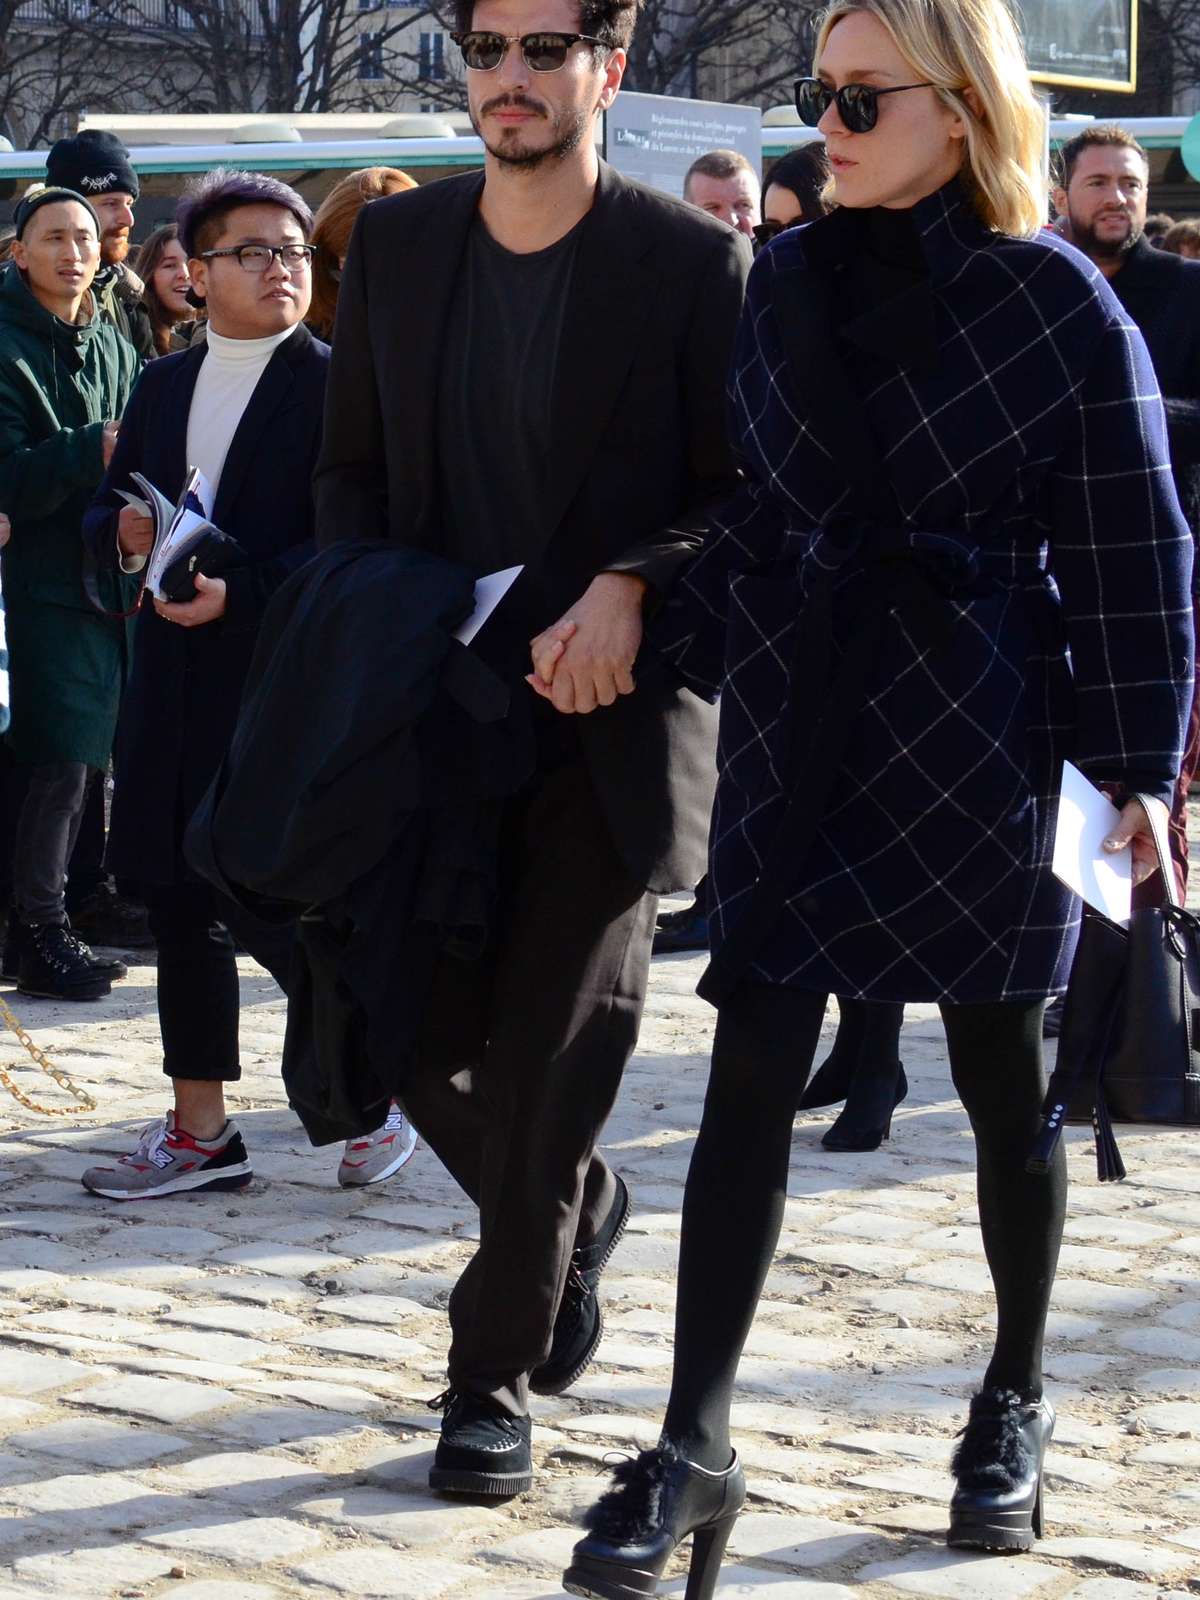 Famosos prestigiam estreia de estilista da Louis Vuitton